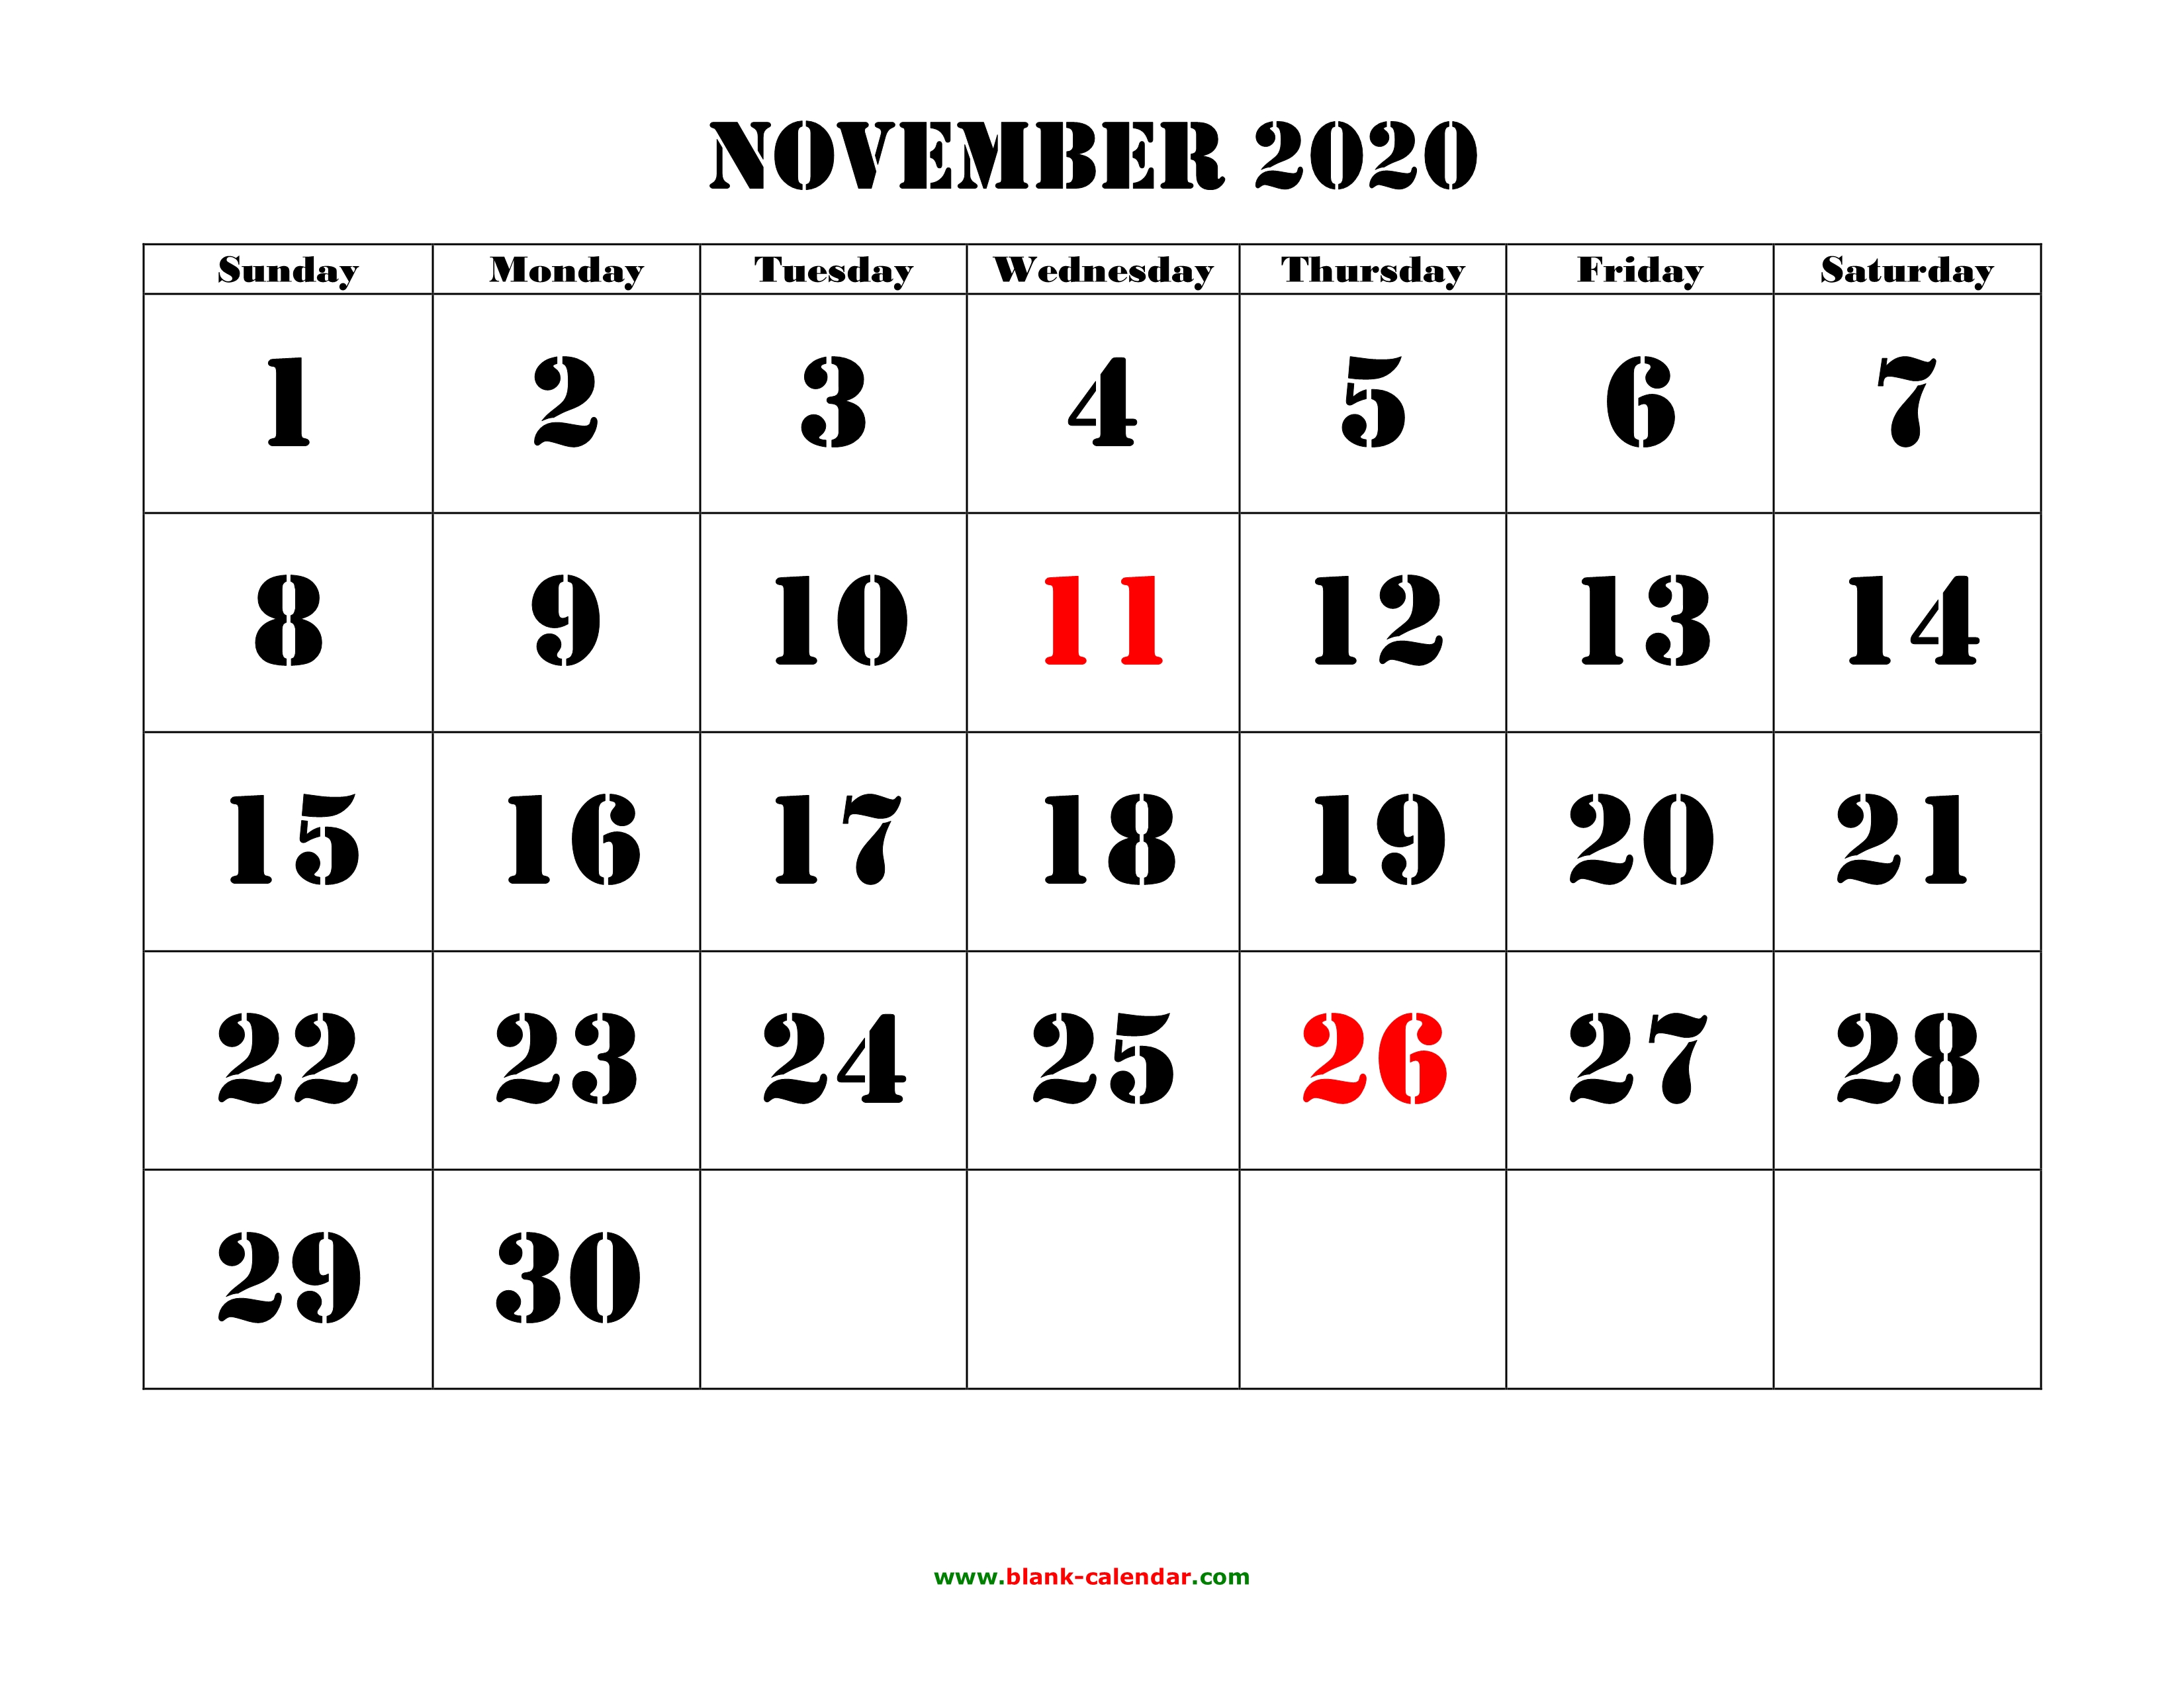 19+ Blank Calendar Pdf November 2020 Images